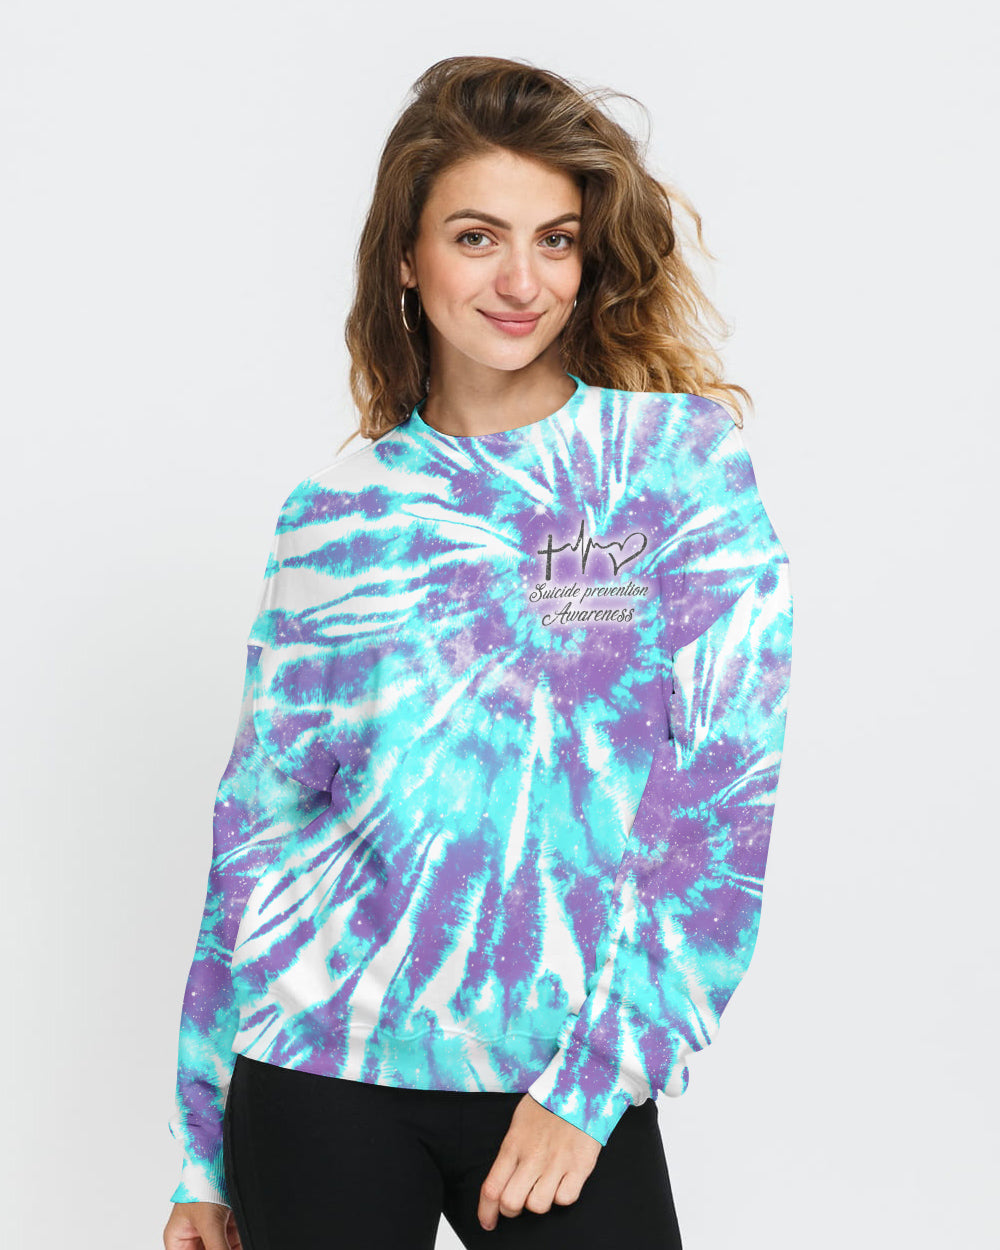 Faith Cross Sunflower Full Tie Dye Women's Suicide Prevention Awareness Sweatshirt